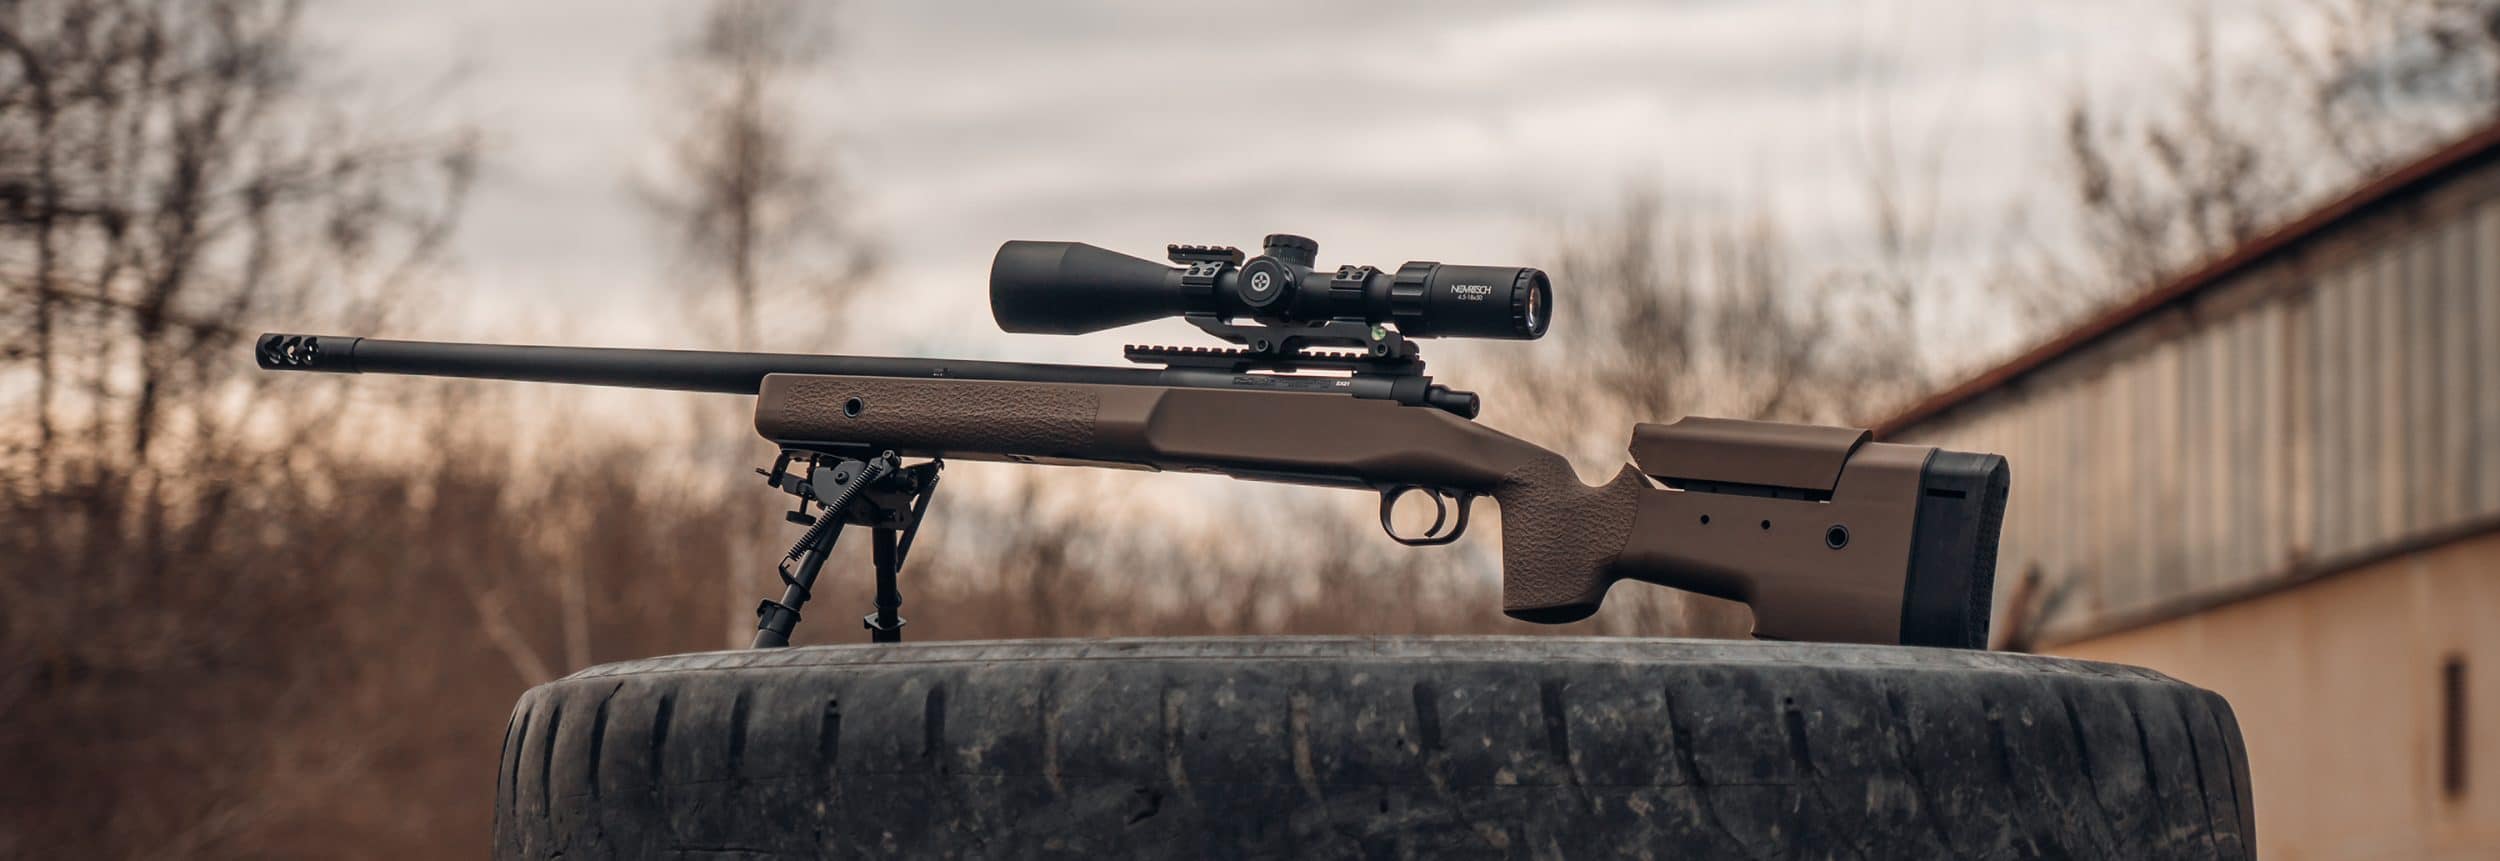 TAC338 – Limited Edition Sniper Rifle 限定版 スナイパーライフル 